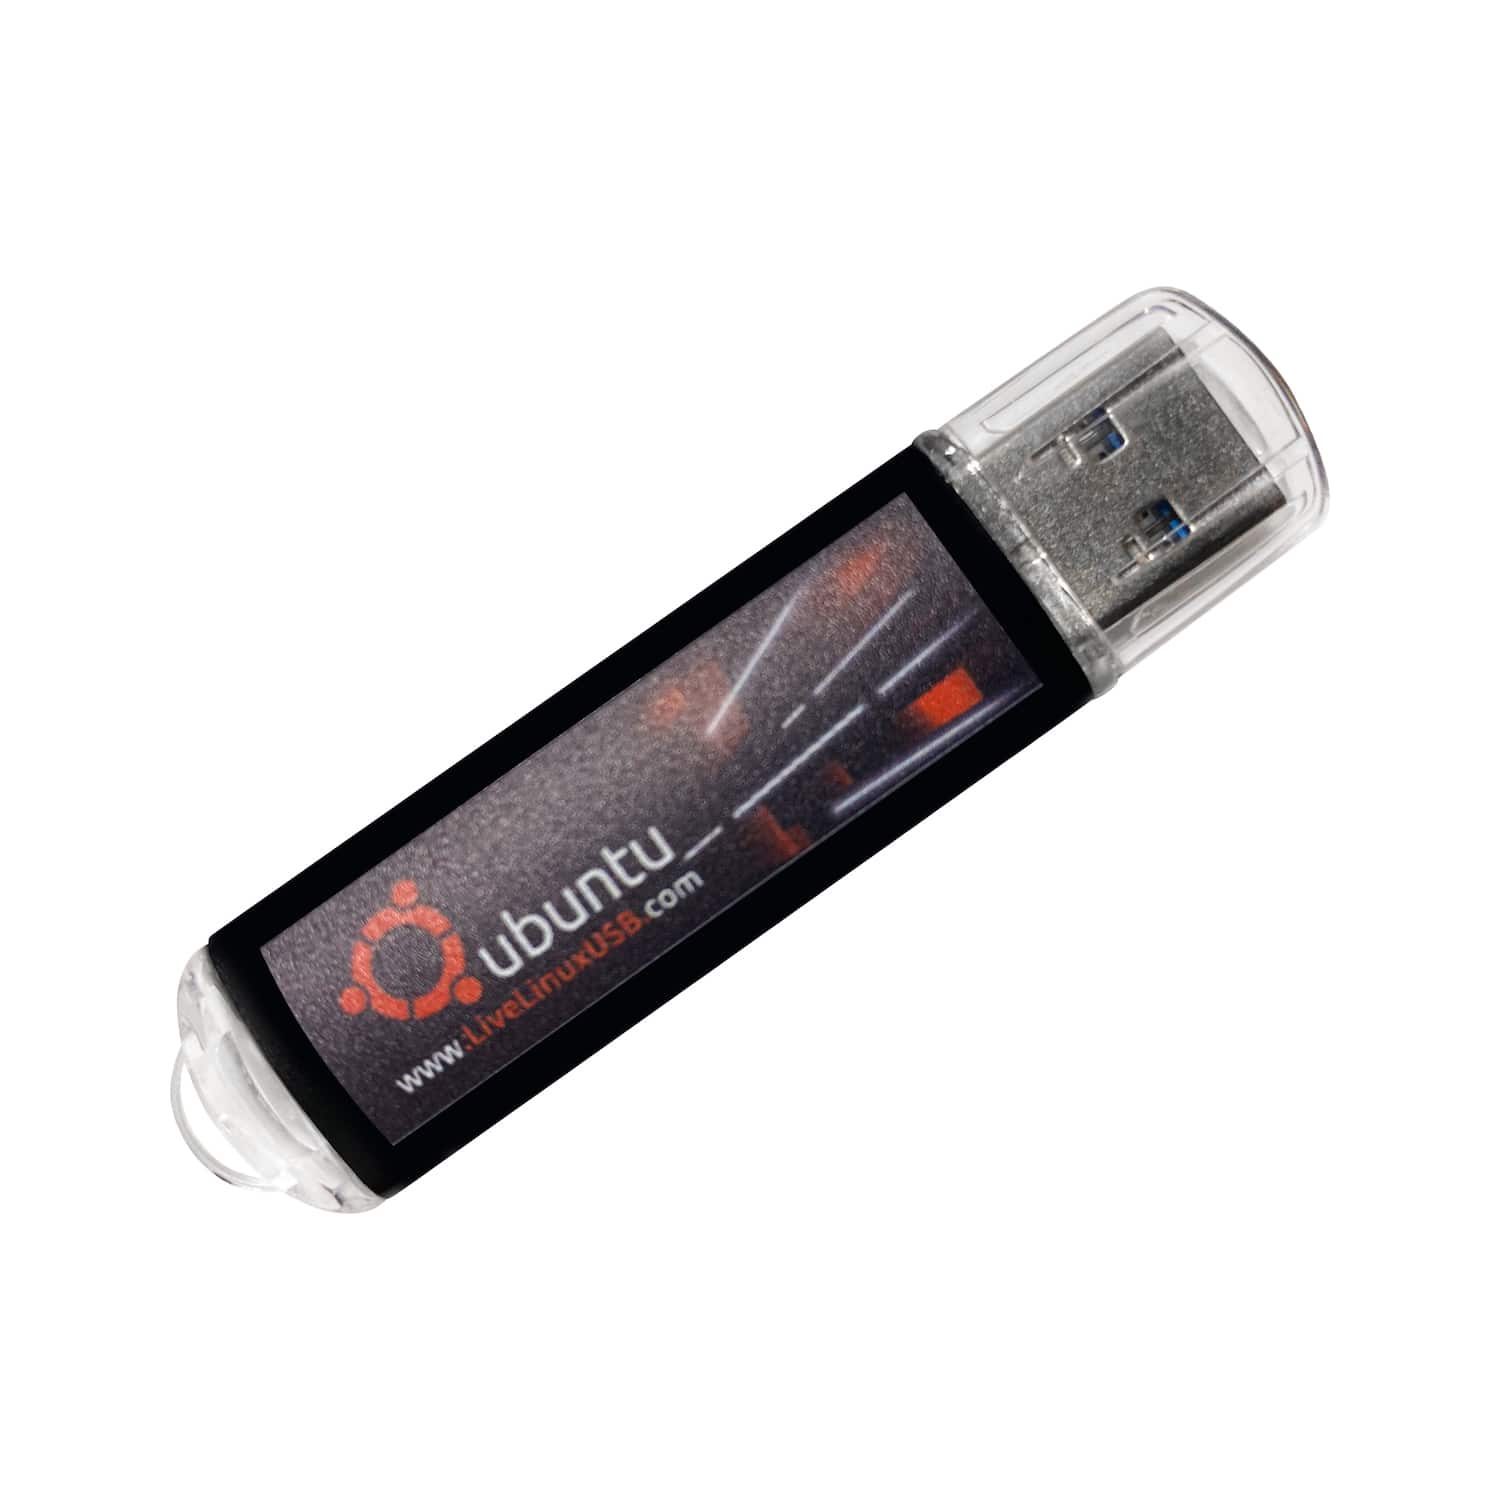 Ubuntu Linux Live USB